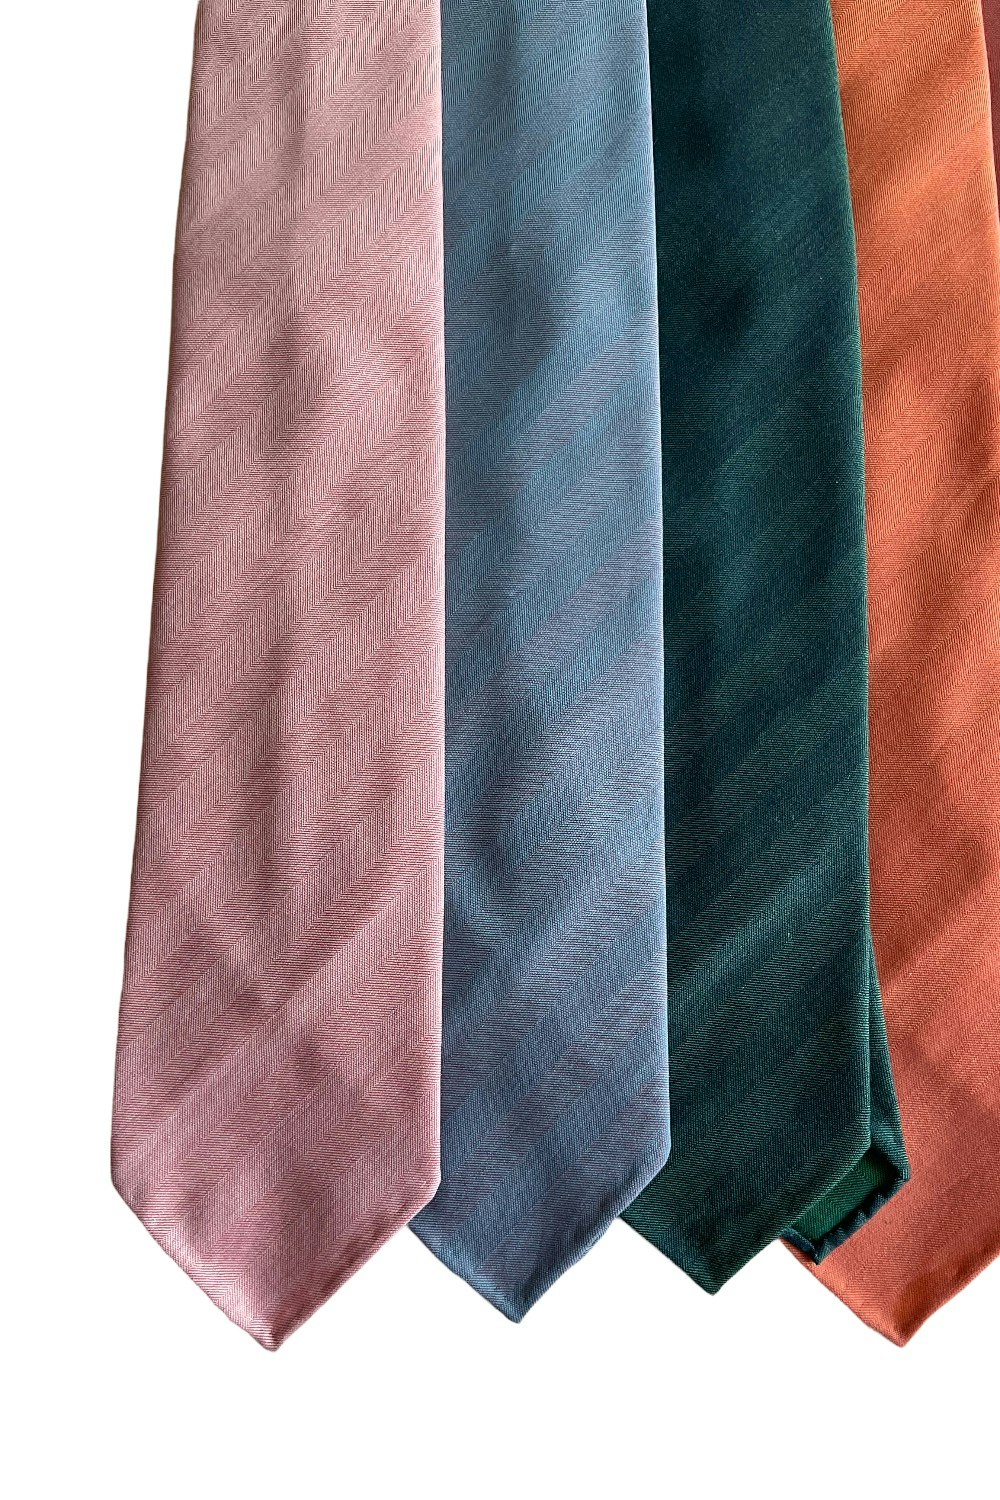 Solaro Wool/Cotton Tie - Untipped - Light Blue